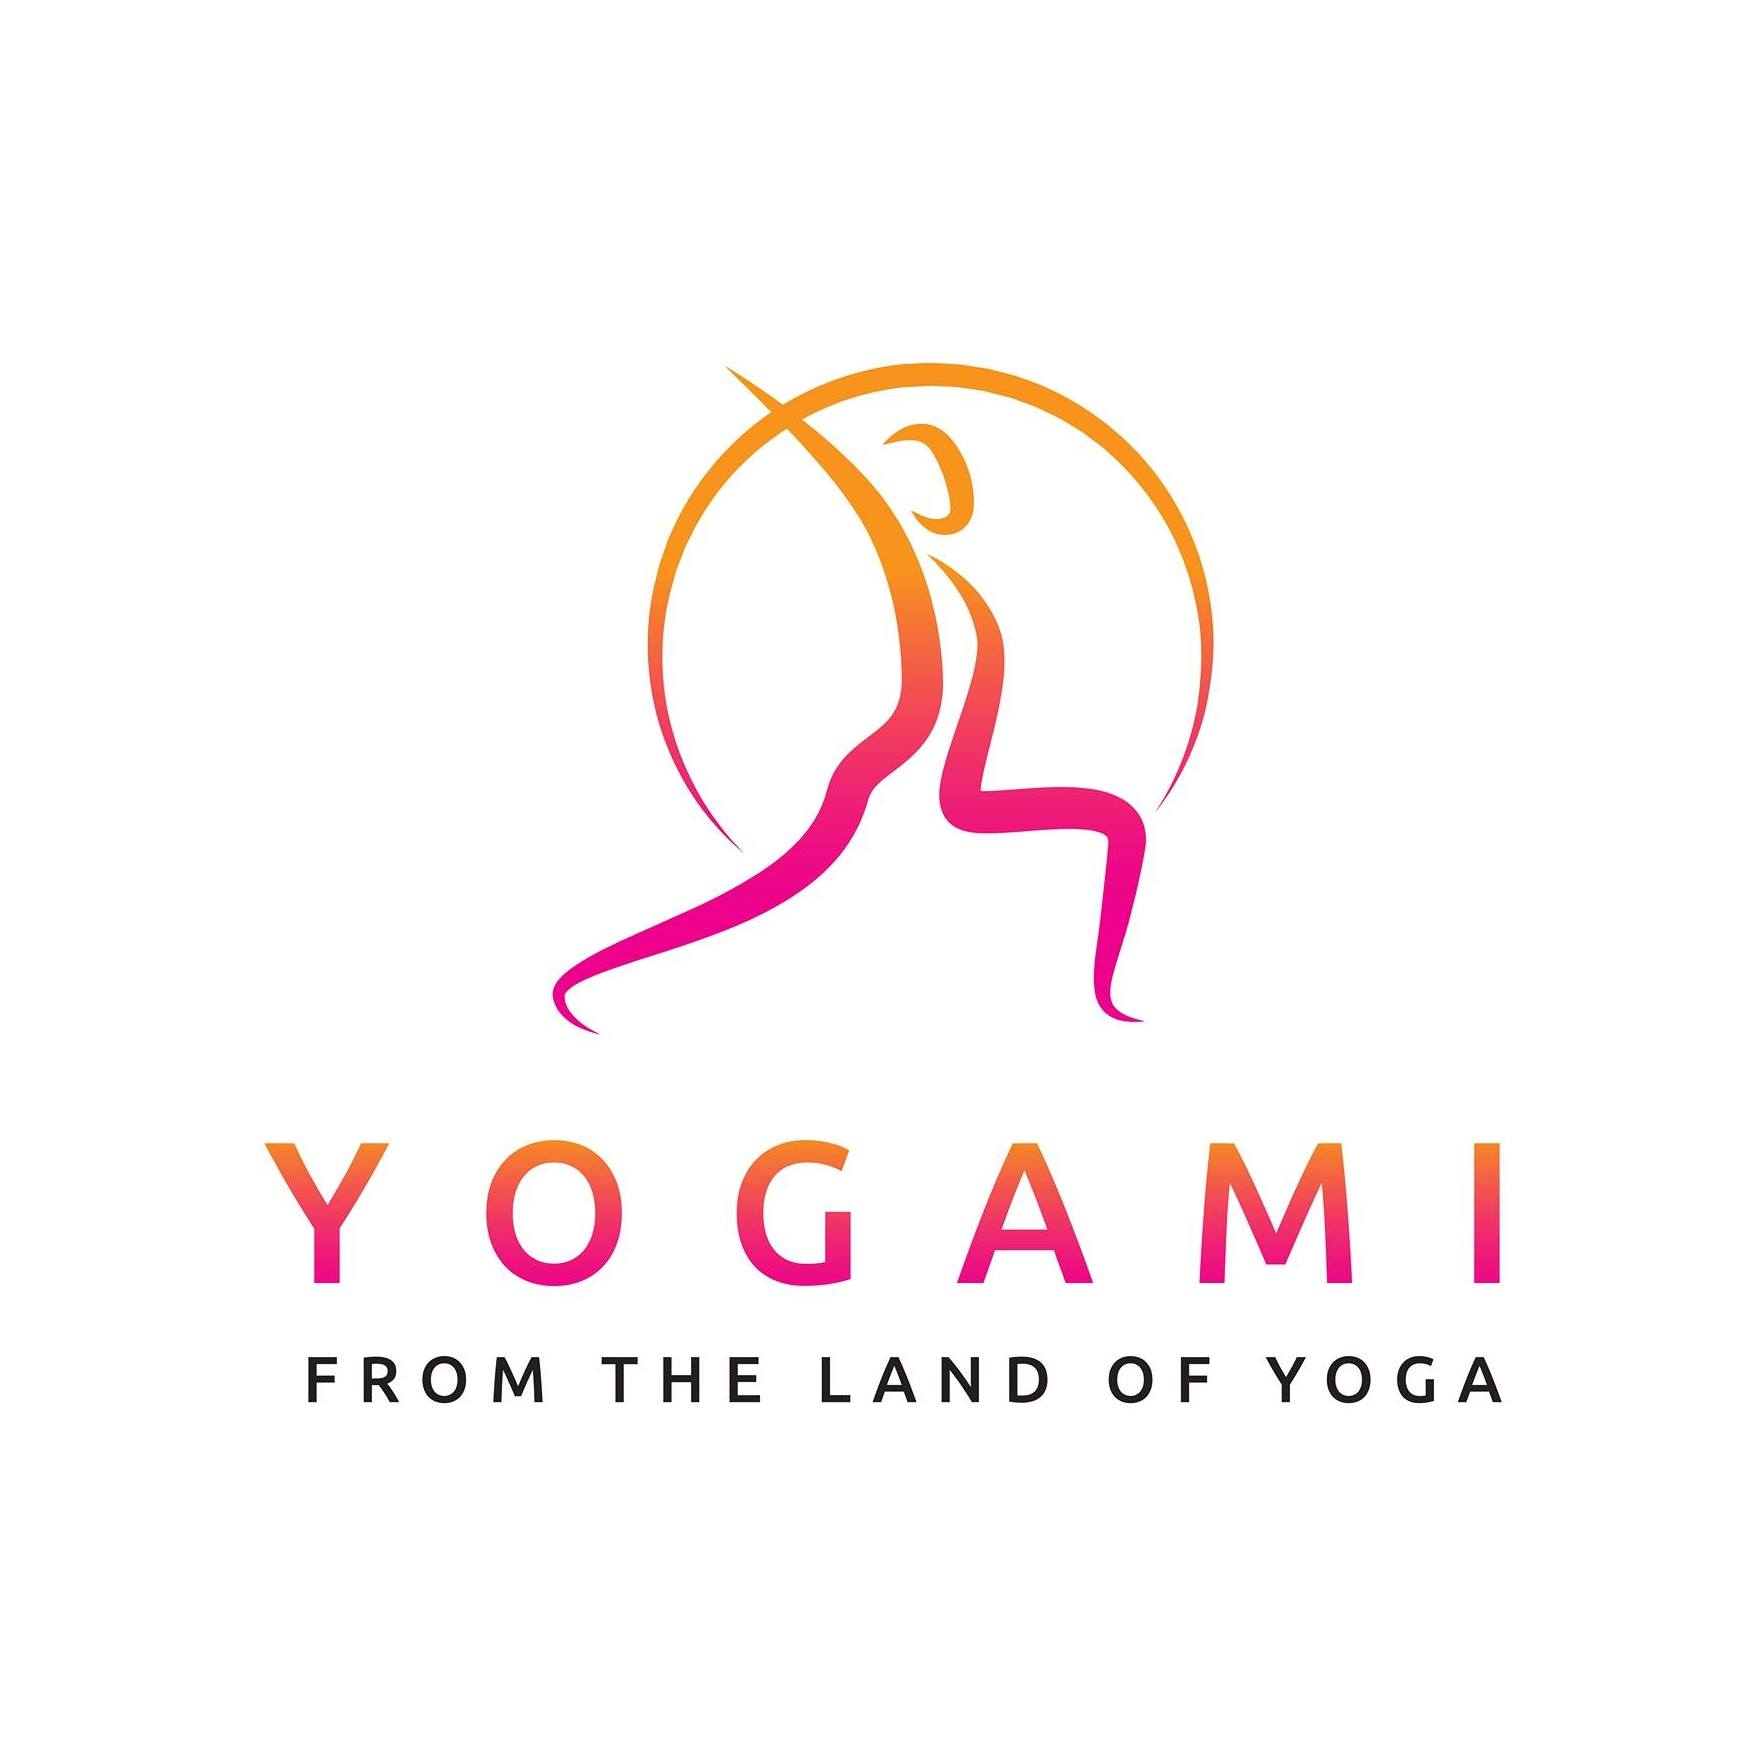 Yogami India